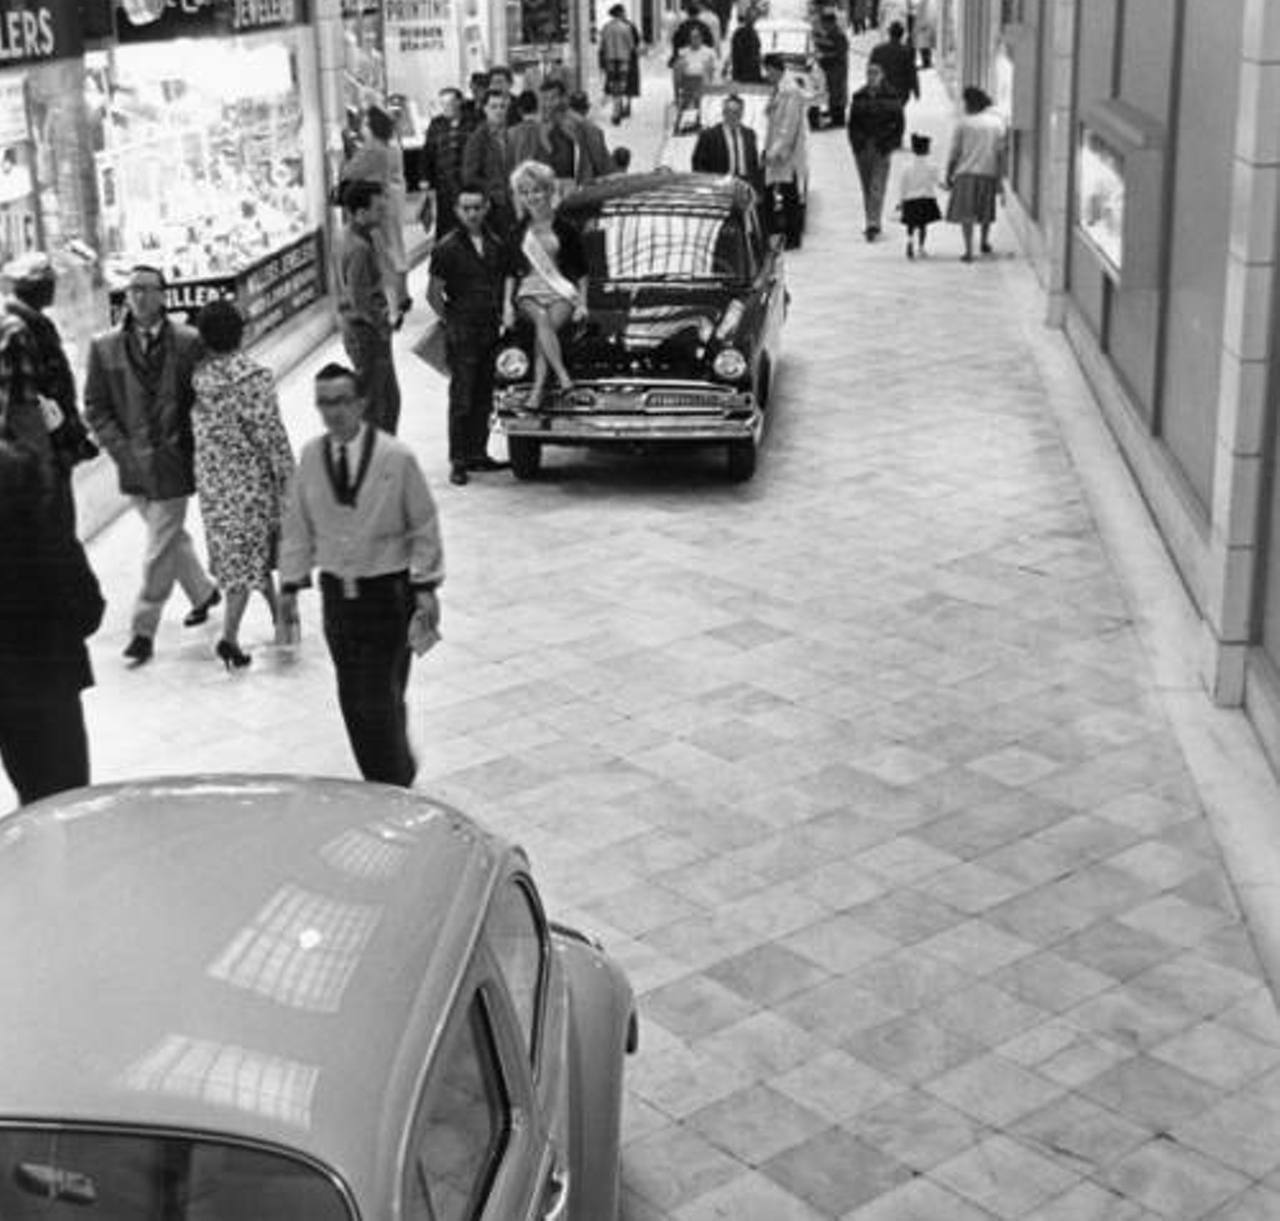 Shopping at the Arcade, 1961.